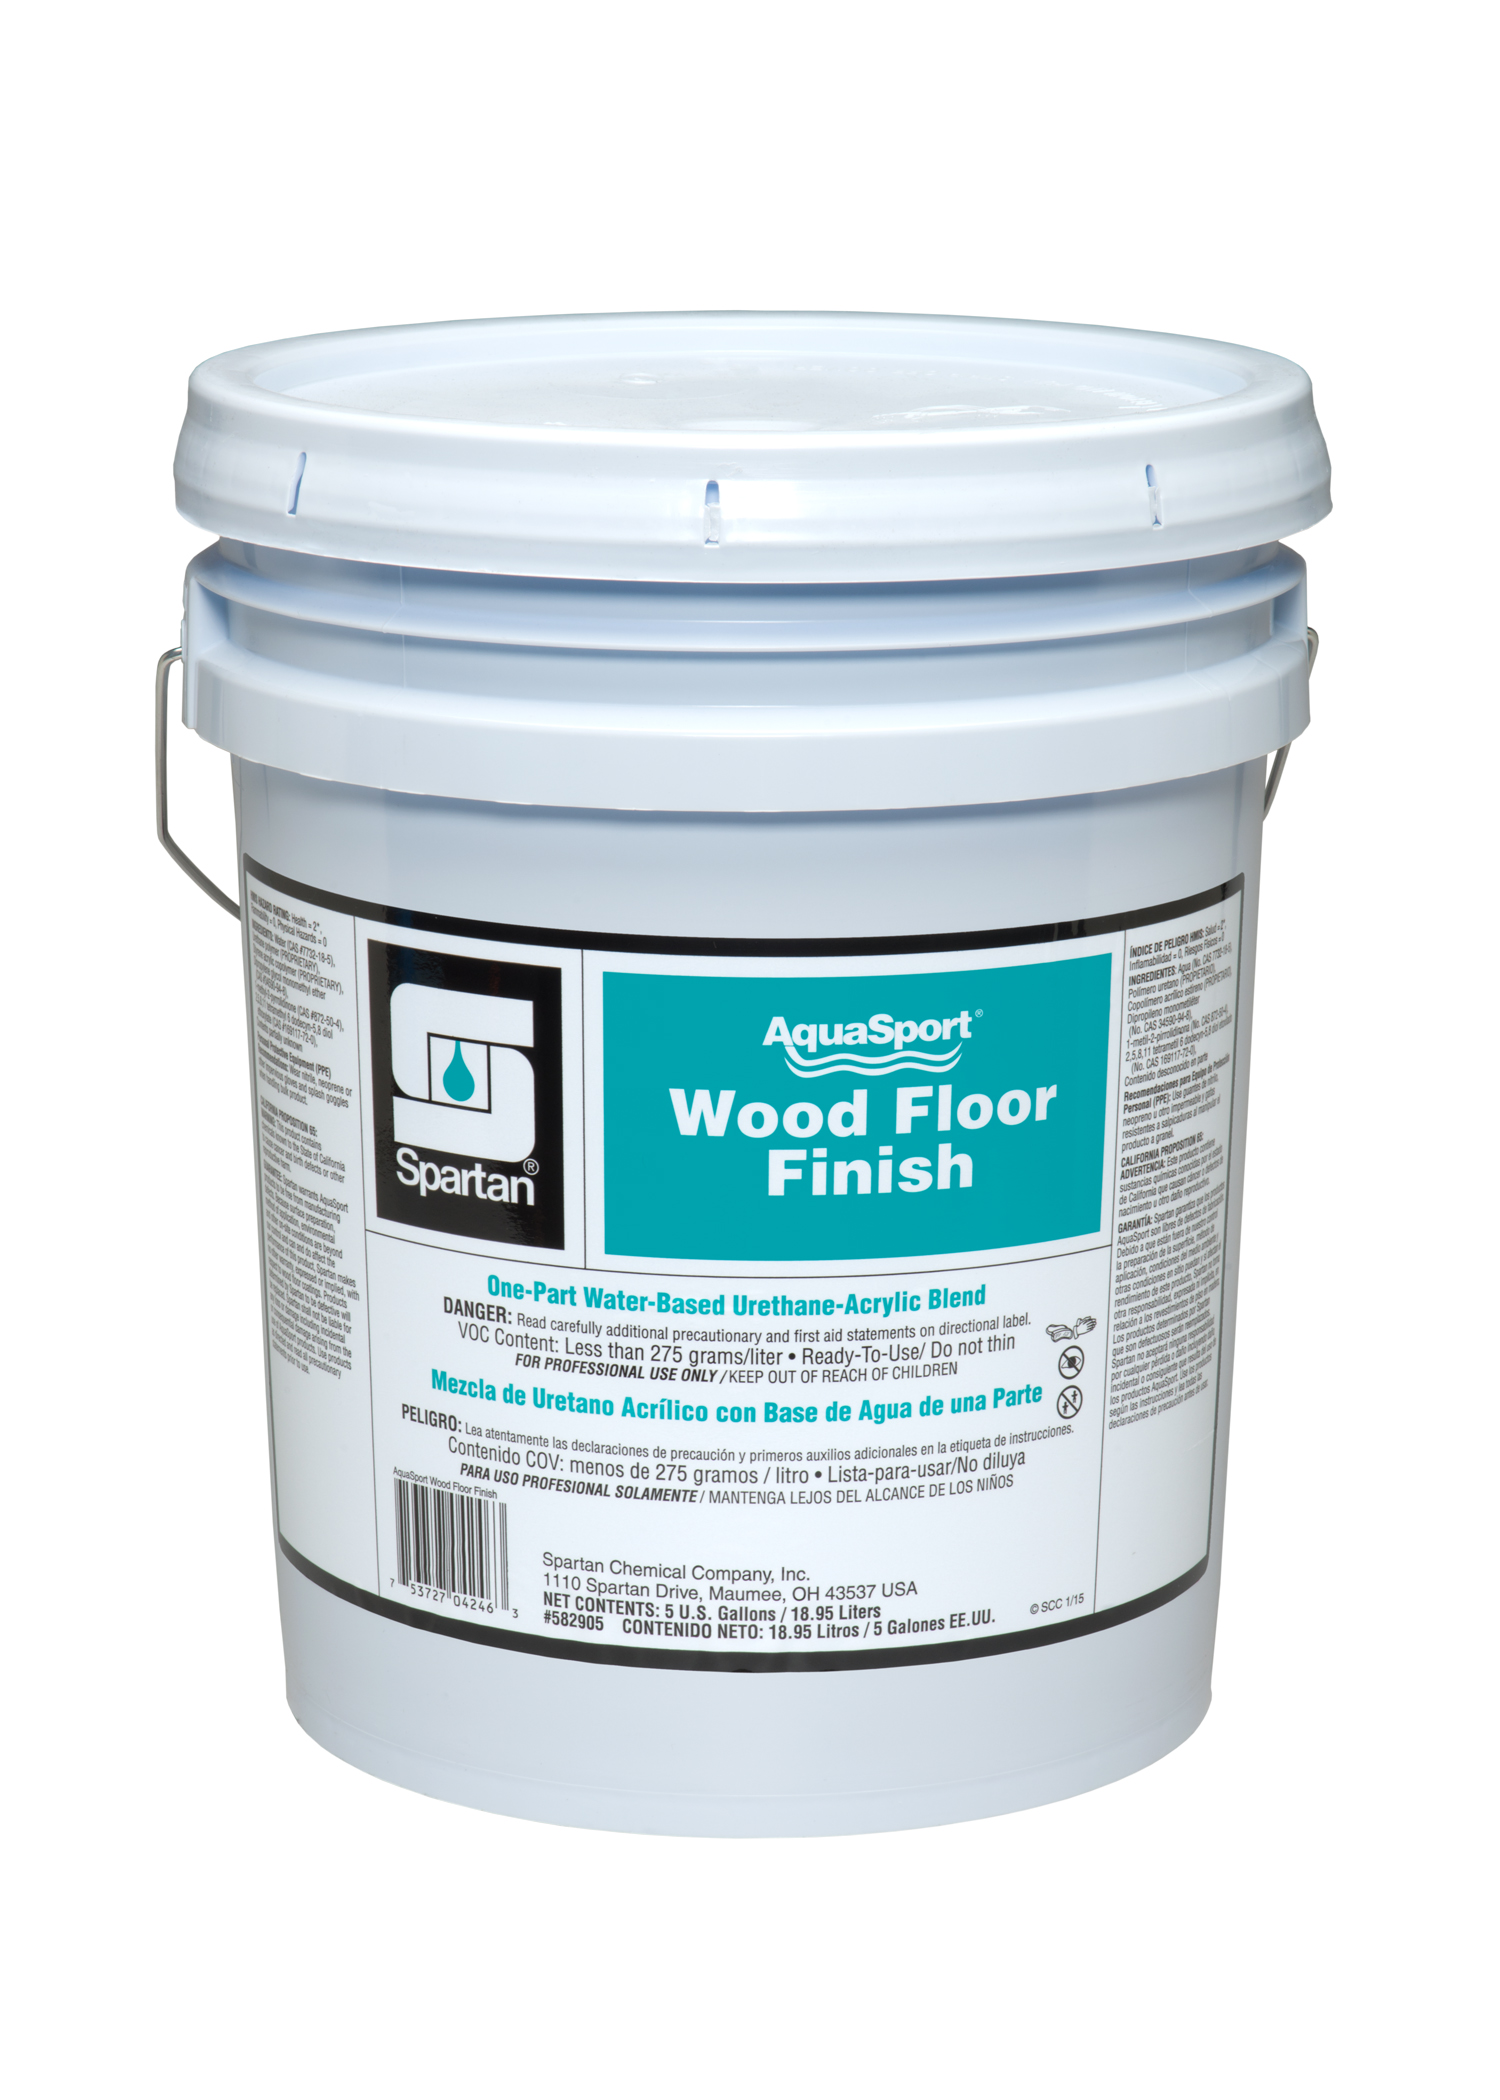 AquaSport® Wood Floor Finish 5 gallon pail